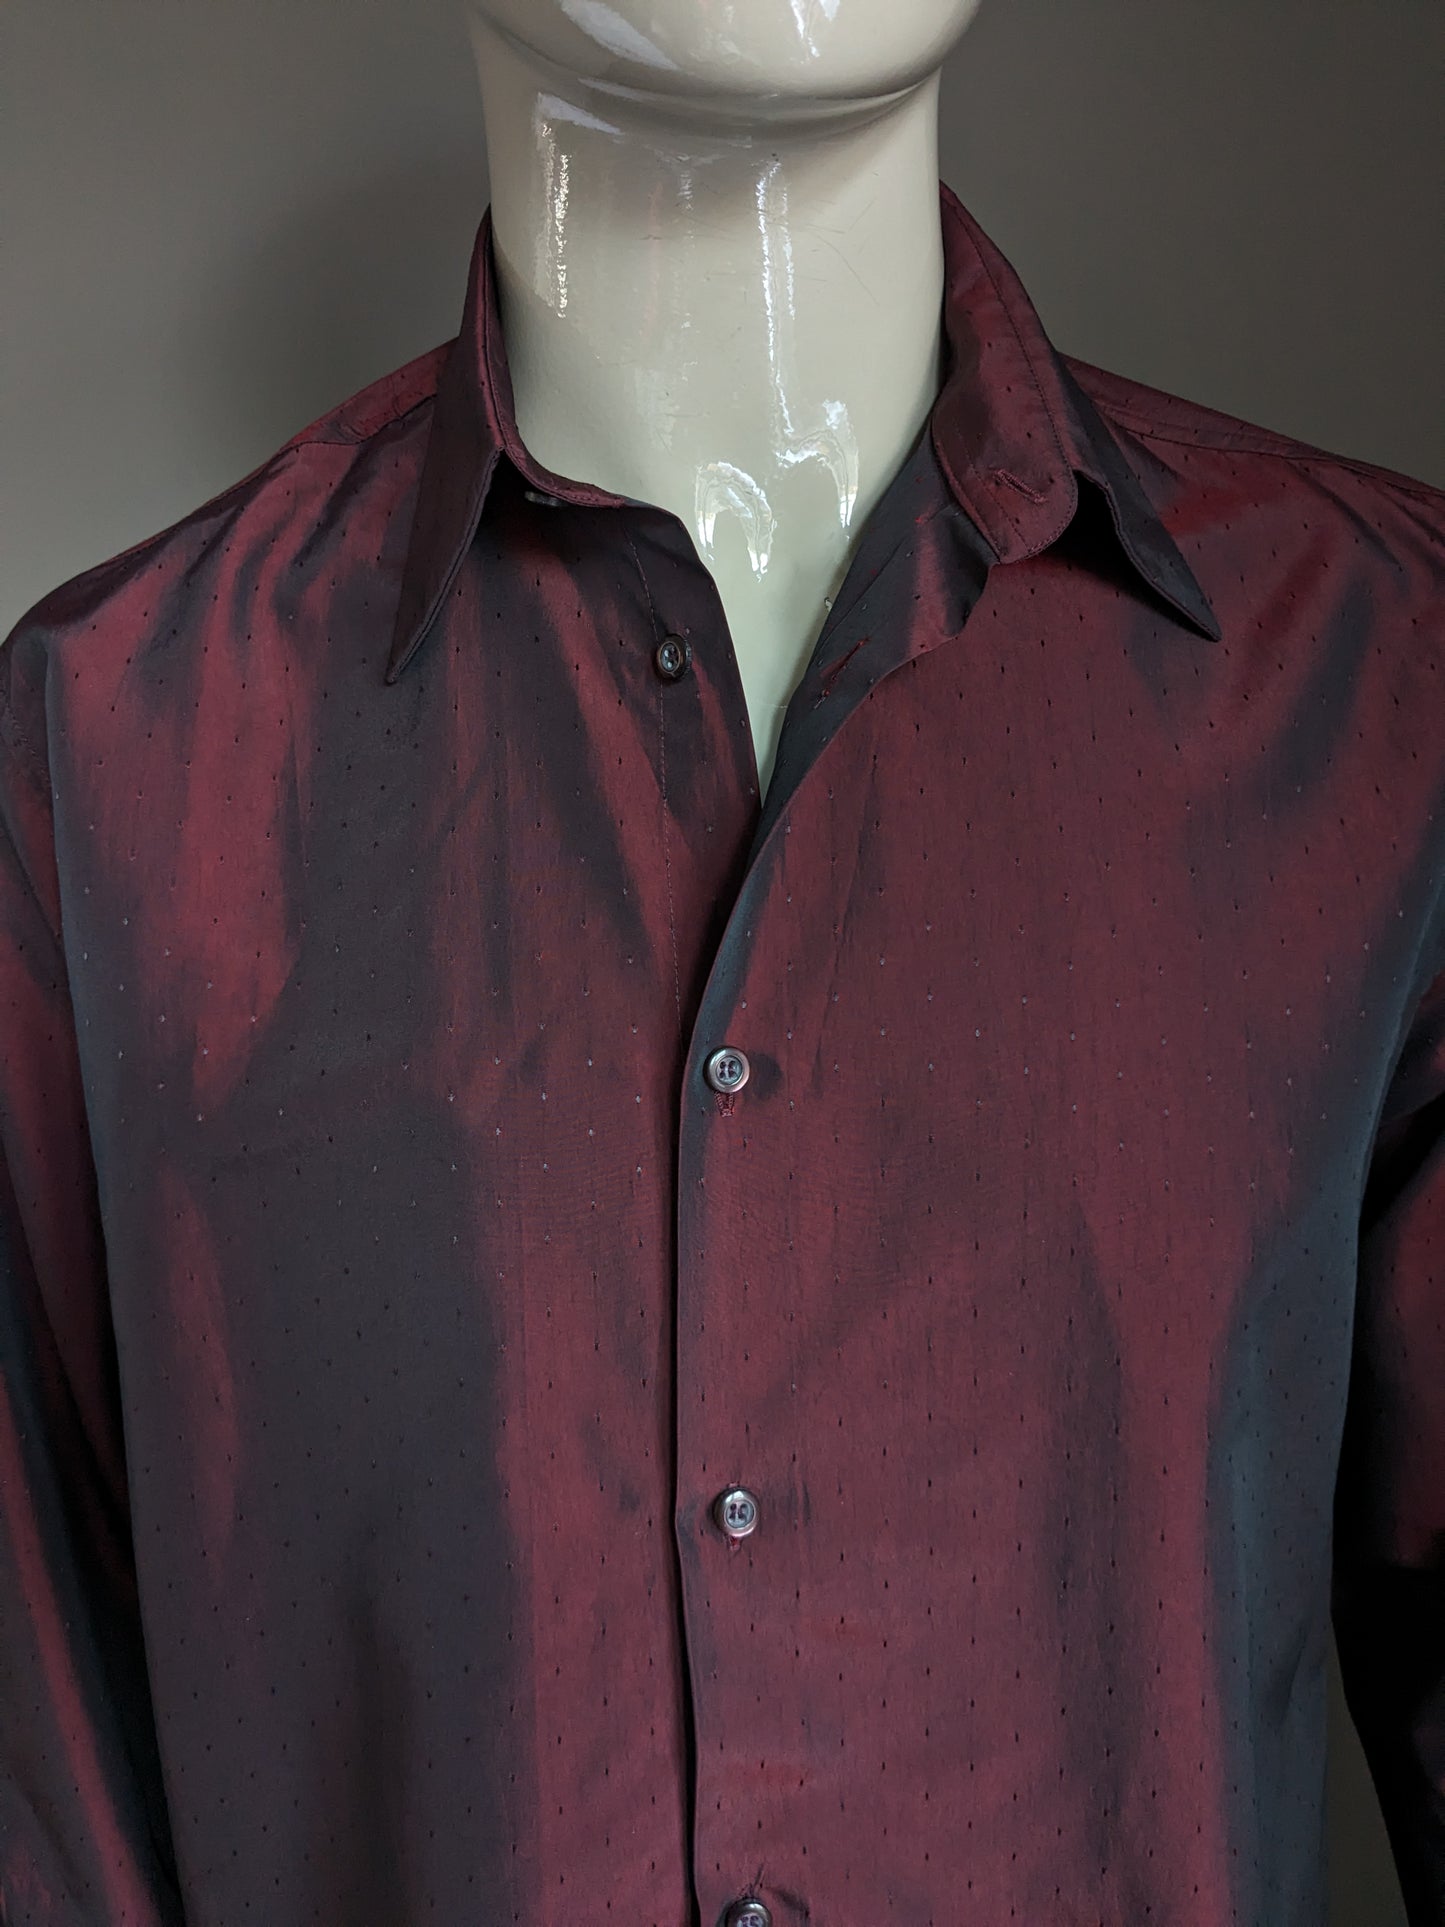 Vintage Angelo Litrico overhemd. Bordeaux glanzend motief. Maat L.